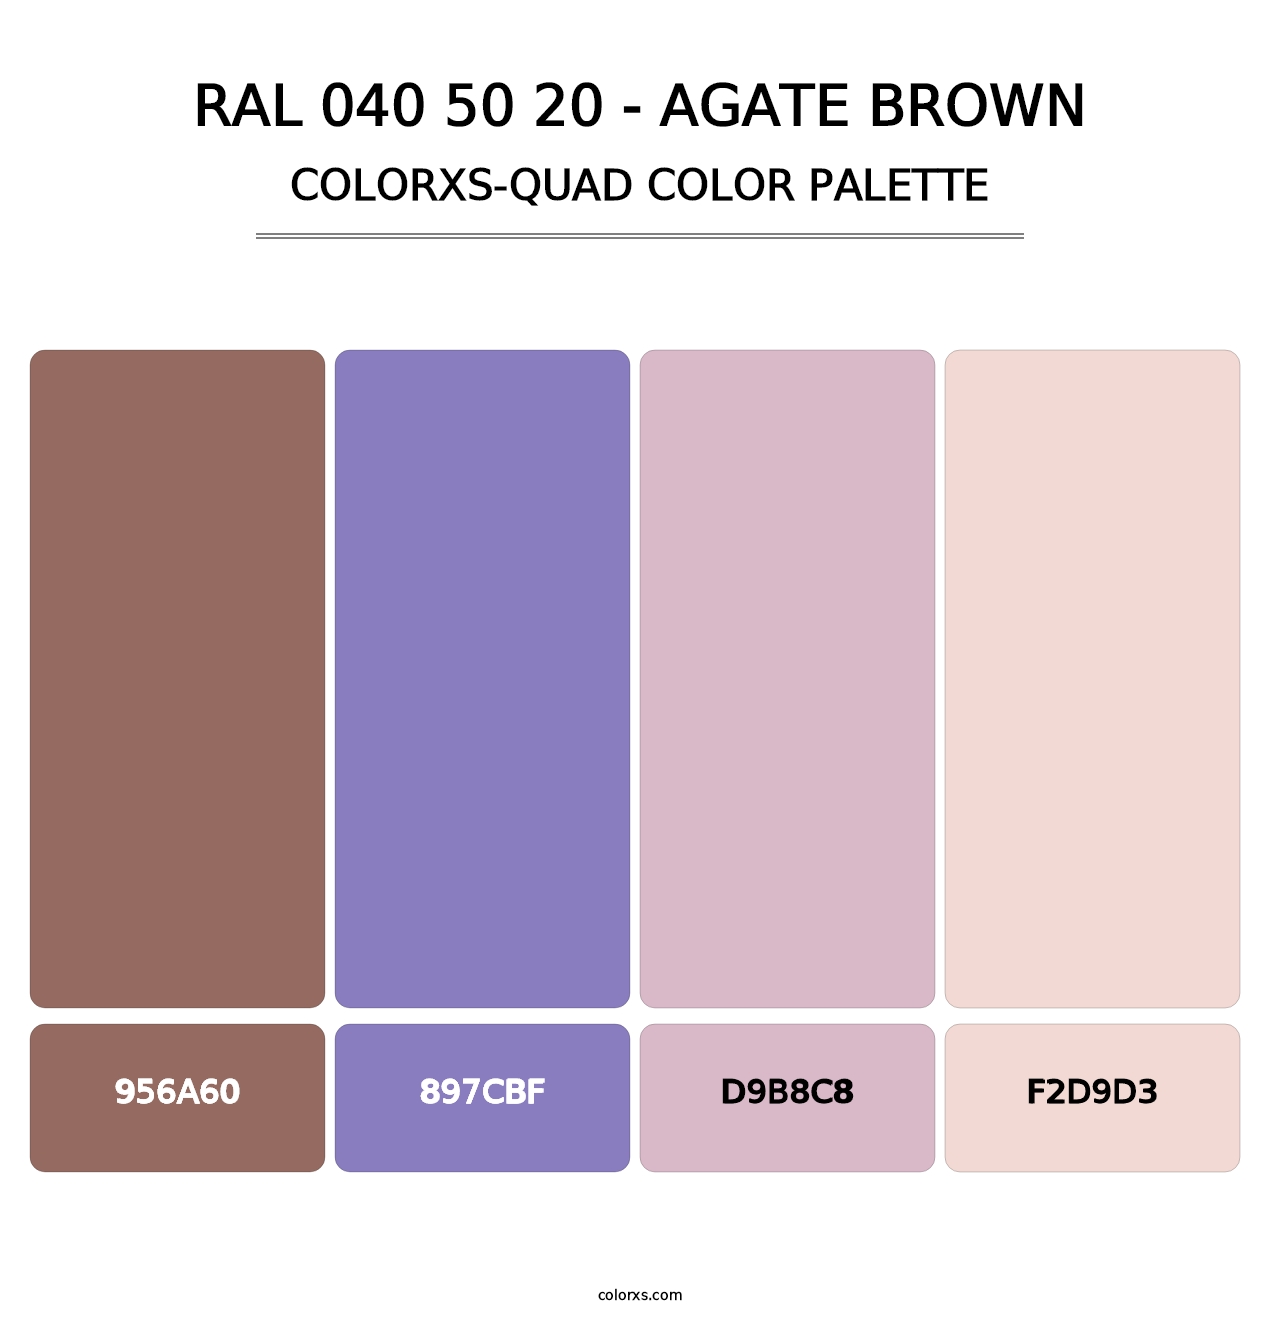 RAL 040 50 20 - Agate Brown - Colorxs Quad Palette